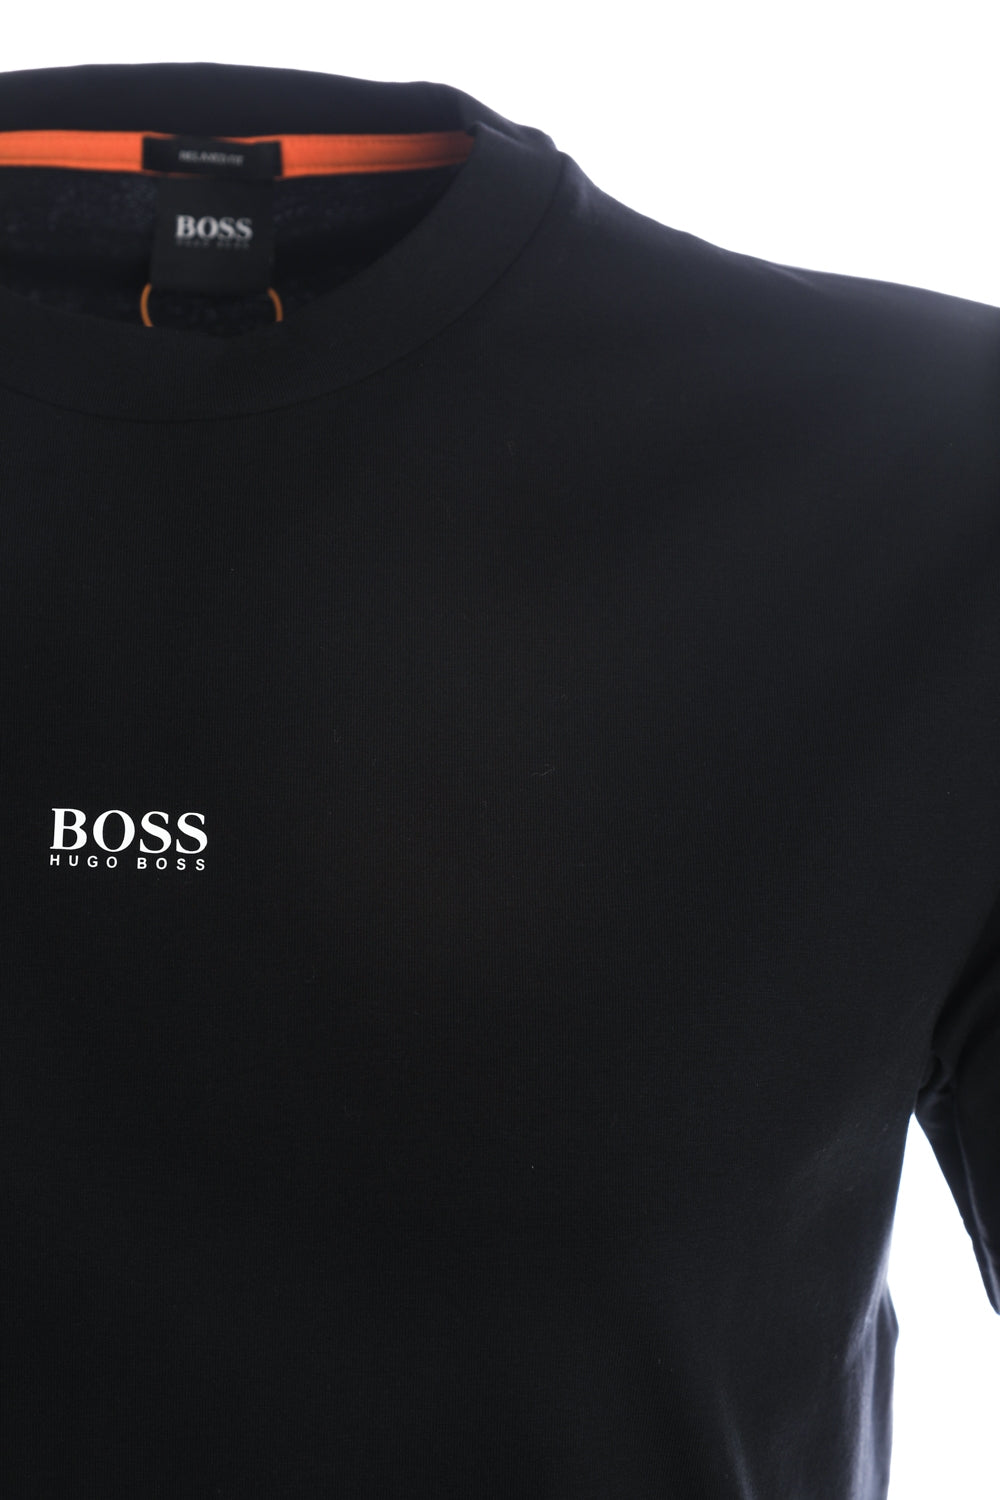 BOSS TChup T Shirt in Black